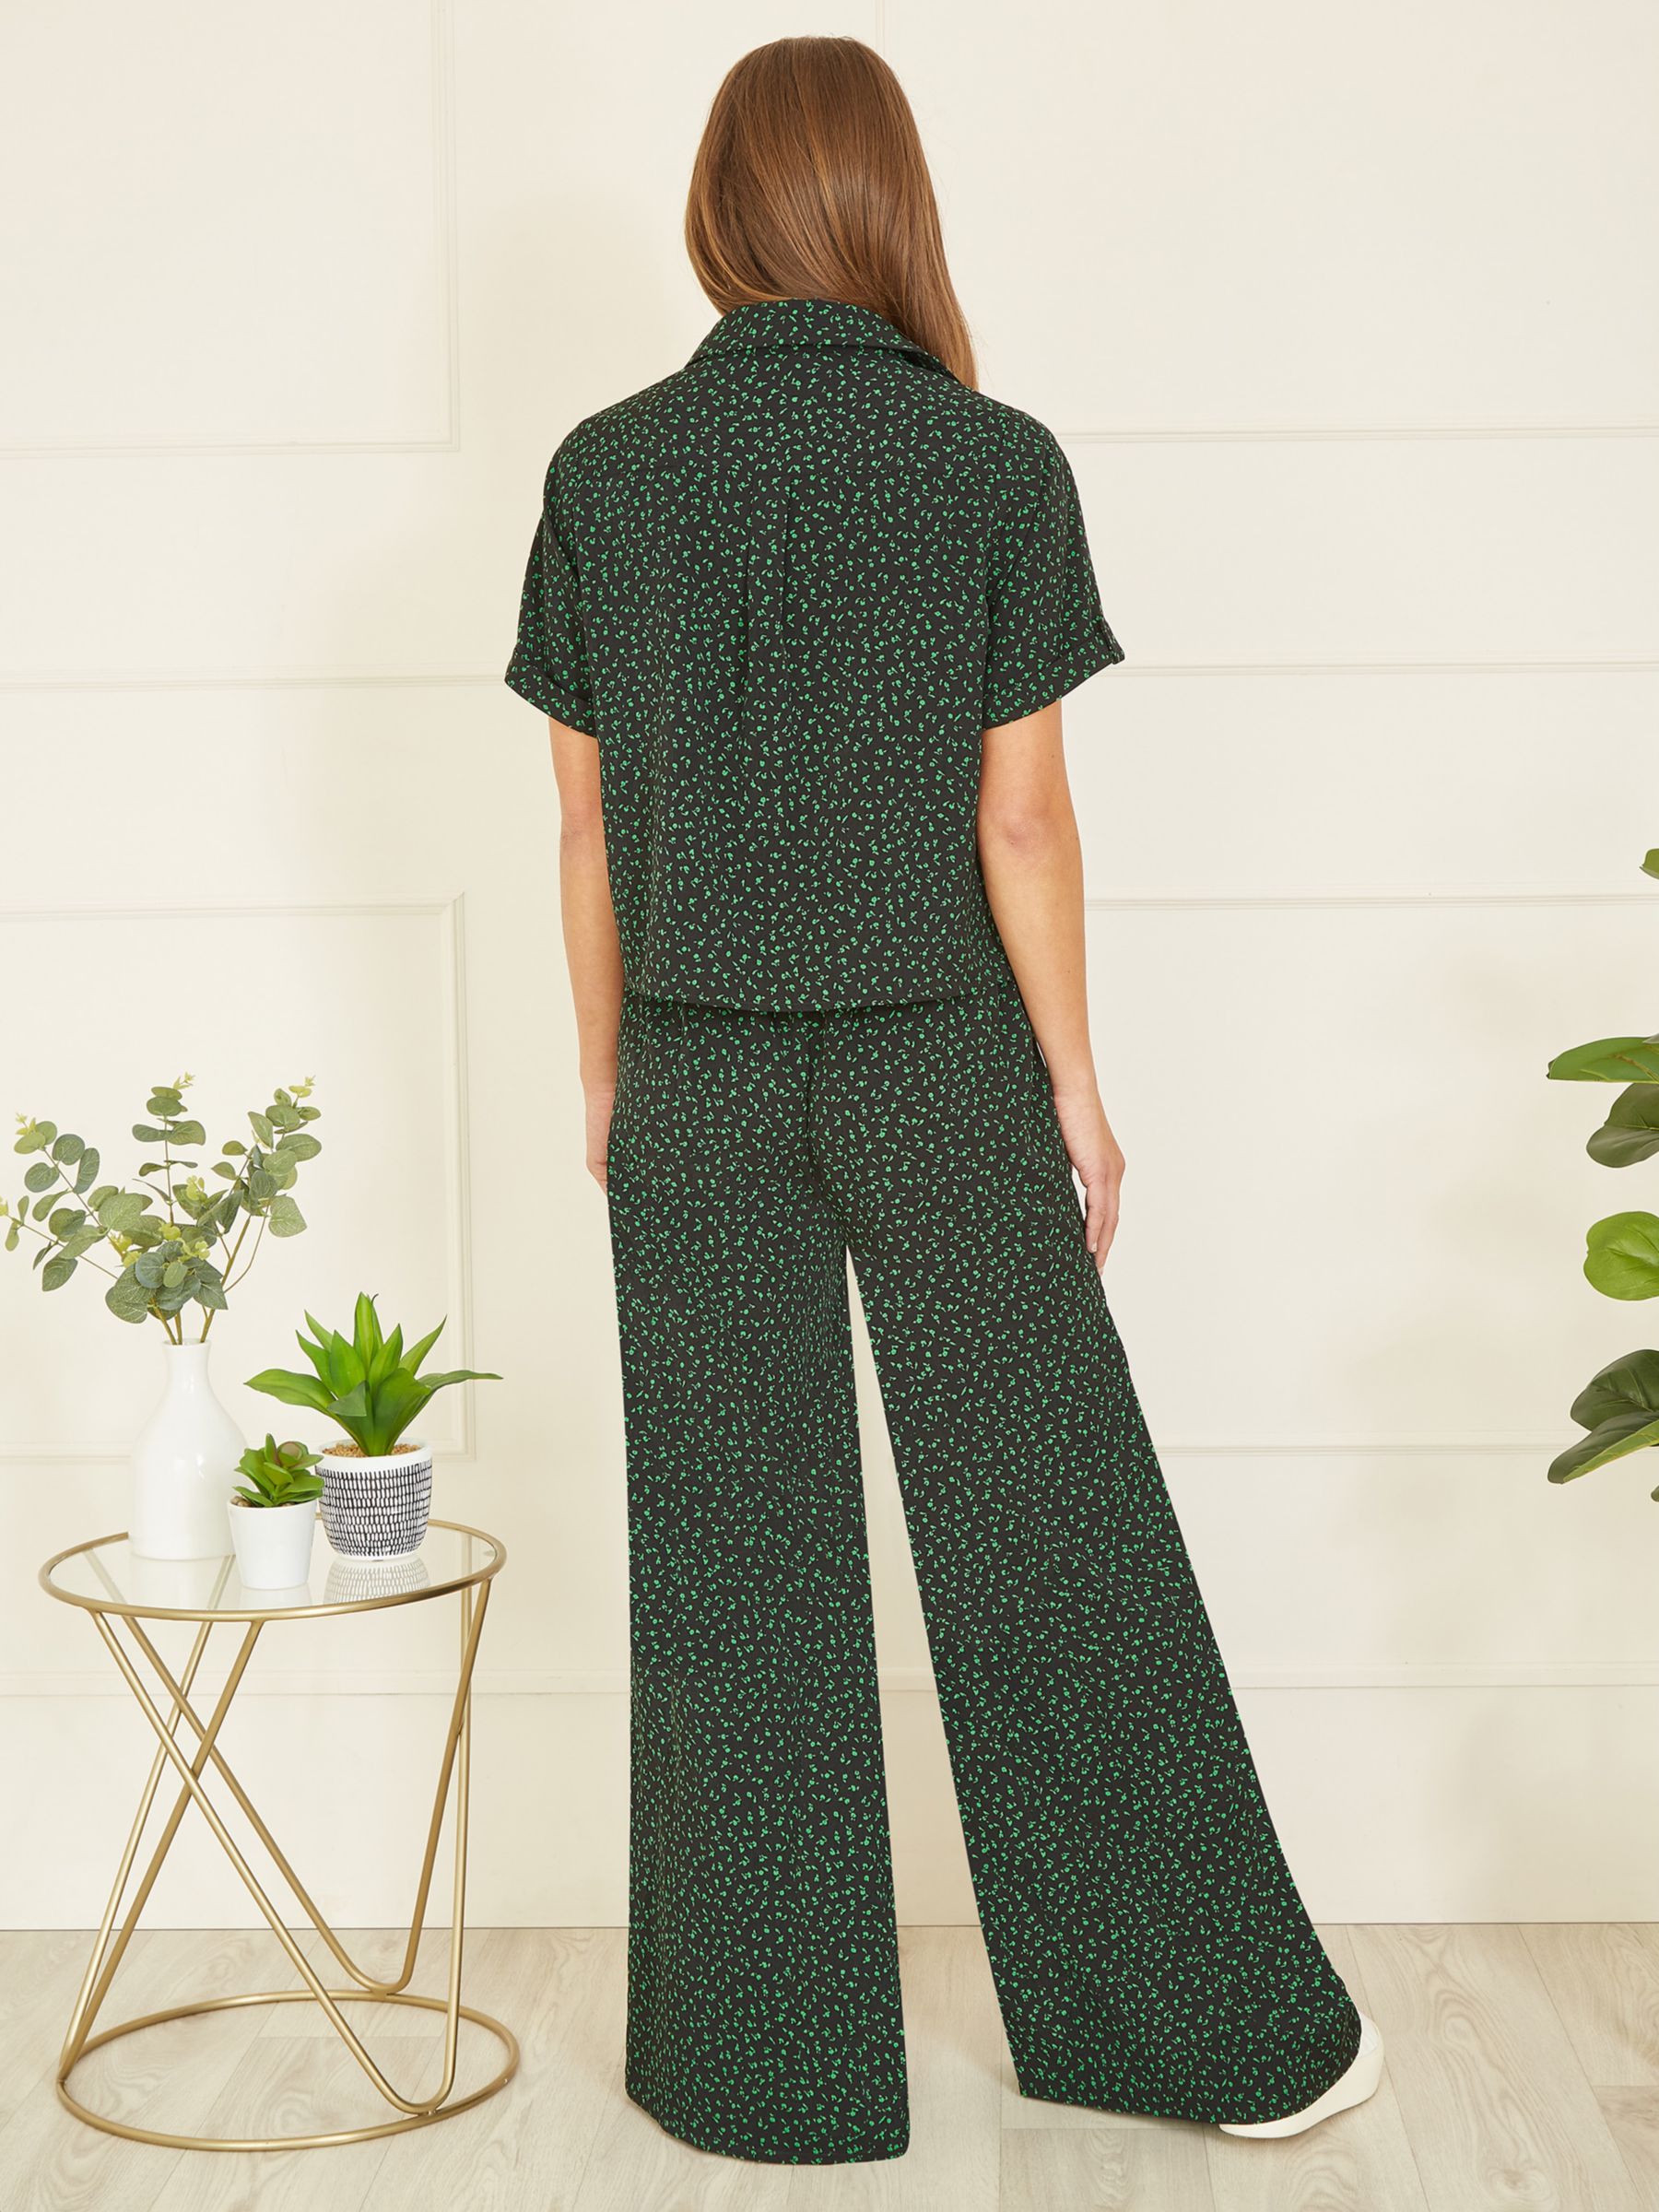 Yumi Ditsy Print Relaxed Fit Shirt, Black/Green, 10